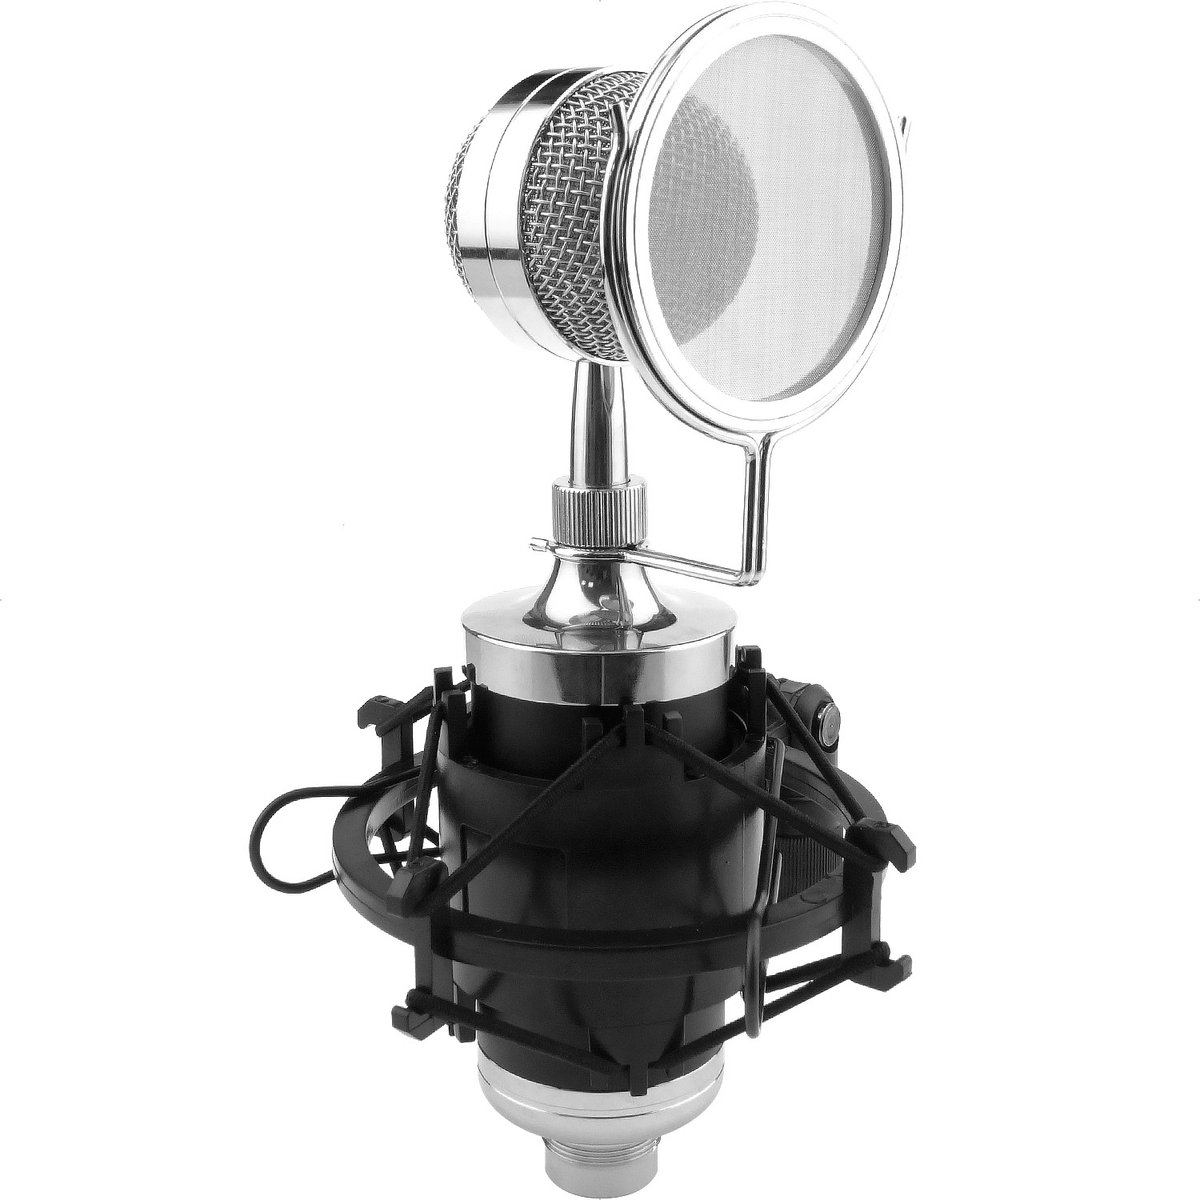 Studio condensator microfoon - direct op PC (5v) of 48v fantoomvoeding